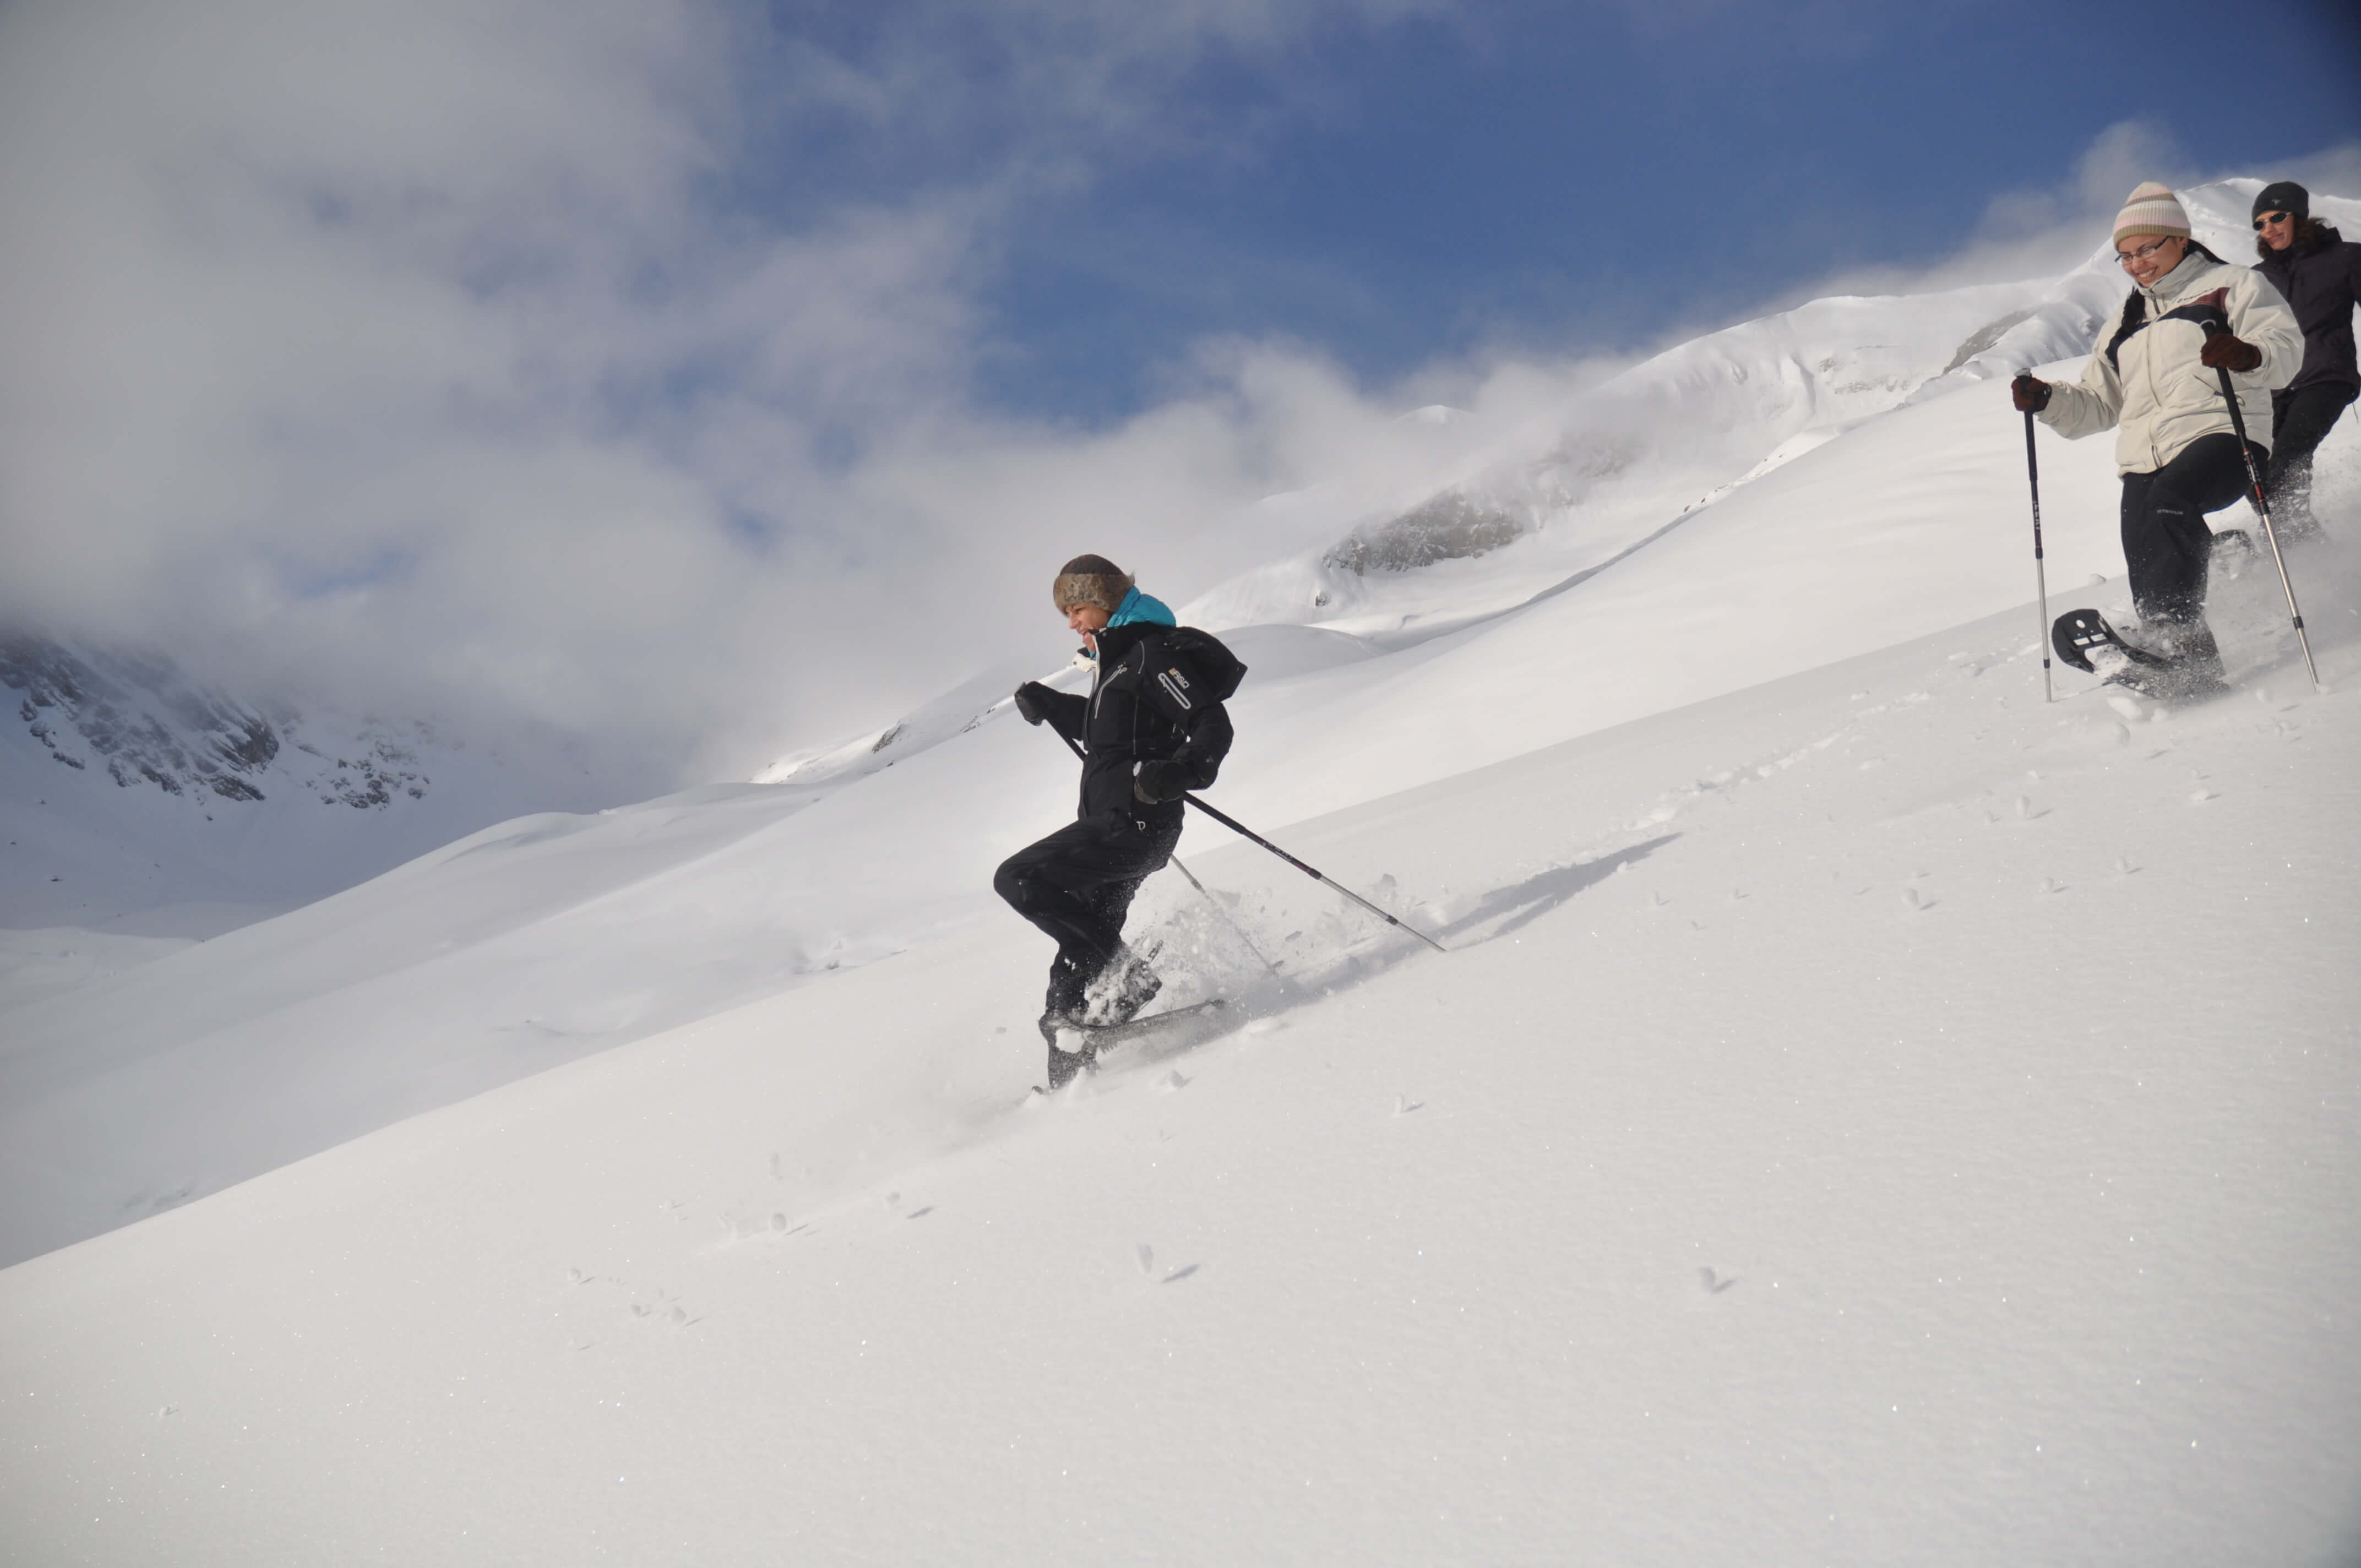 Snowshoe hike in fresh powder snow